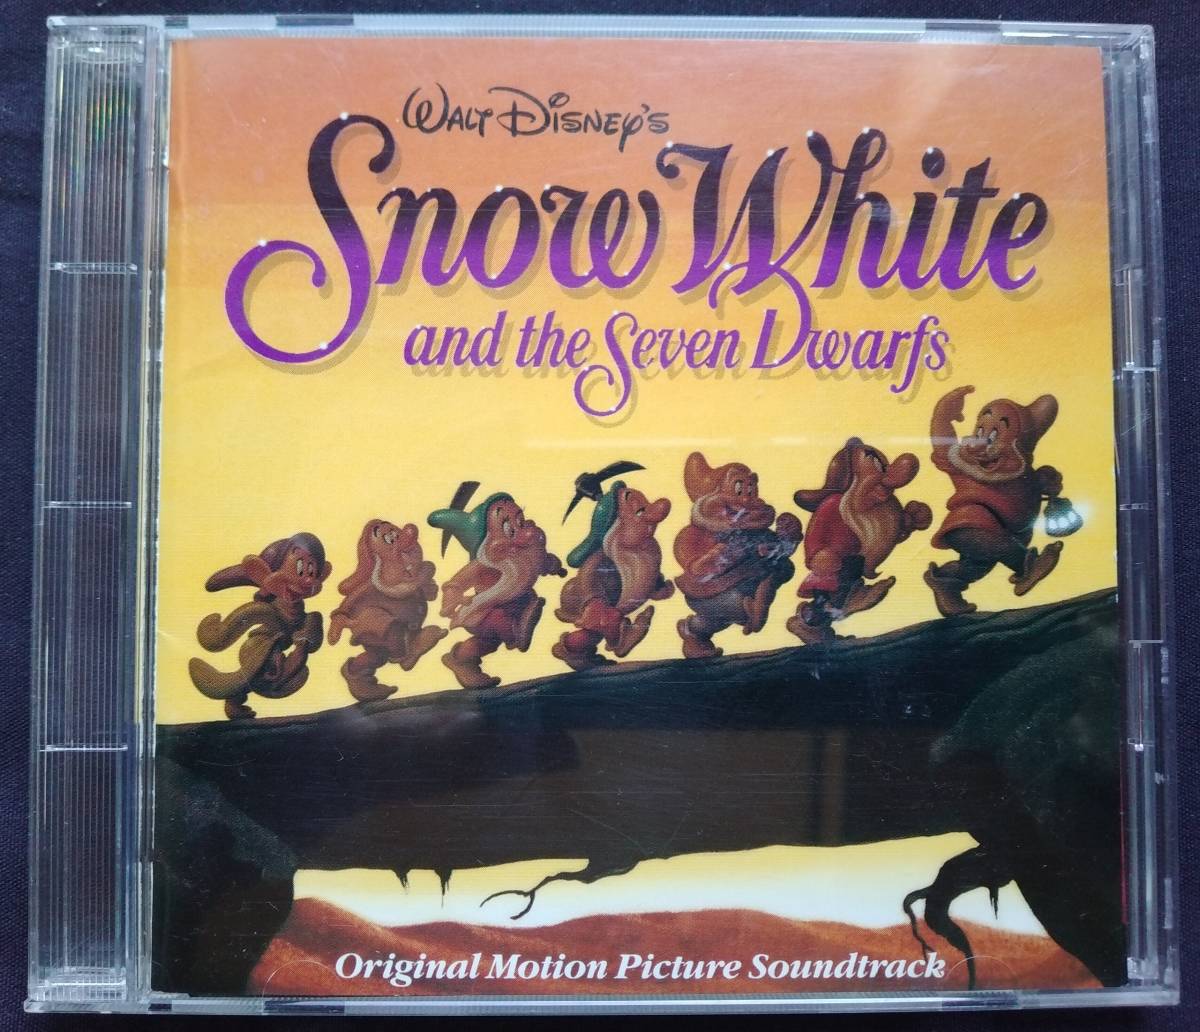 CD Белоснежка оригинал * motion * Picture * саундтрек PCCD-00145 Disney SNOW WHITE AND THE SEVEN DWARFS WALT DISNEY